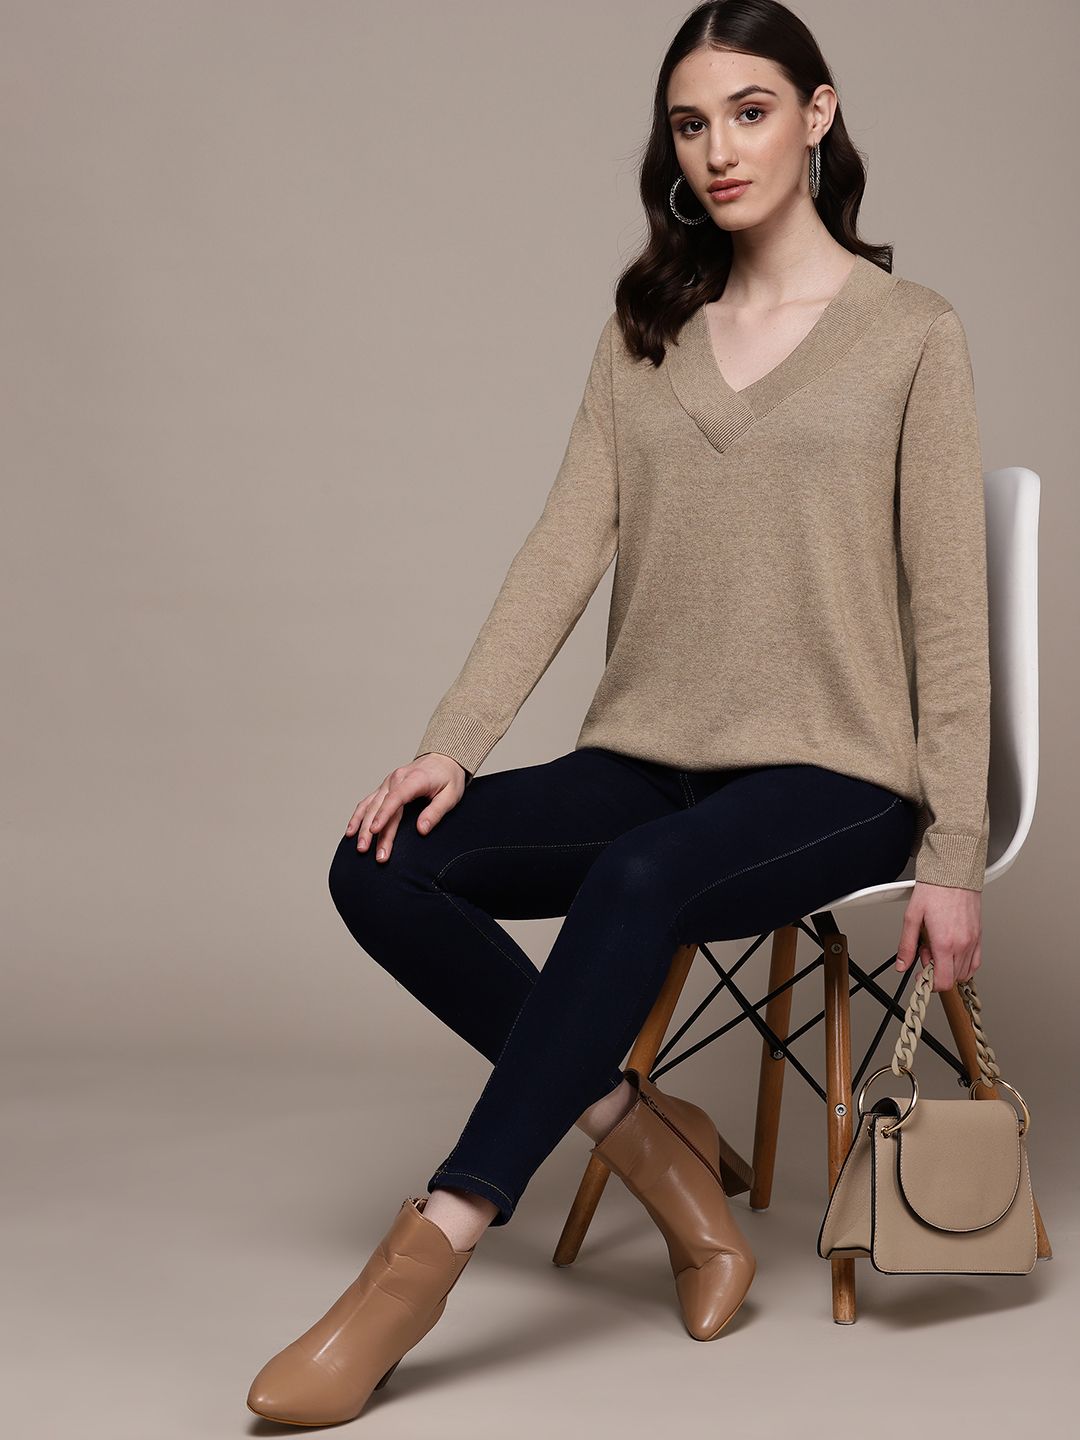 Buy Macy's Karen Scott Women Cotton V Neck Sweater - Sweaters for Women  19768270